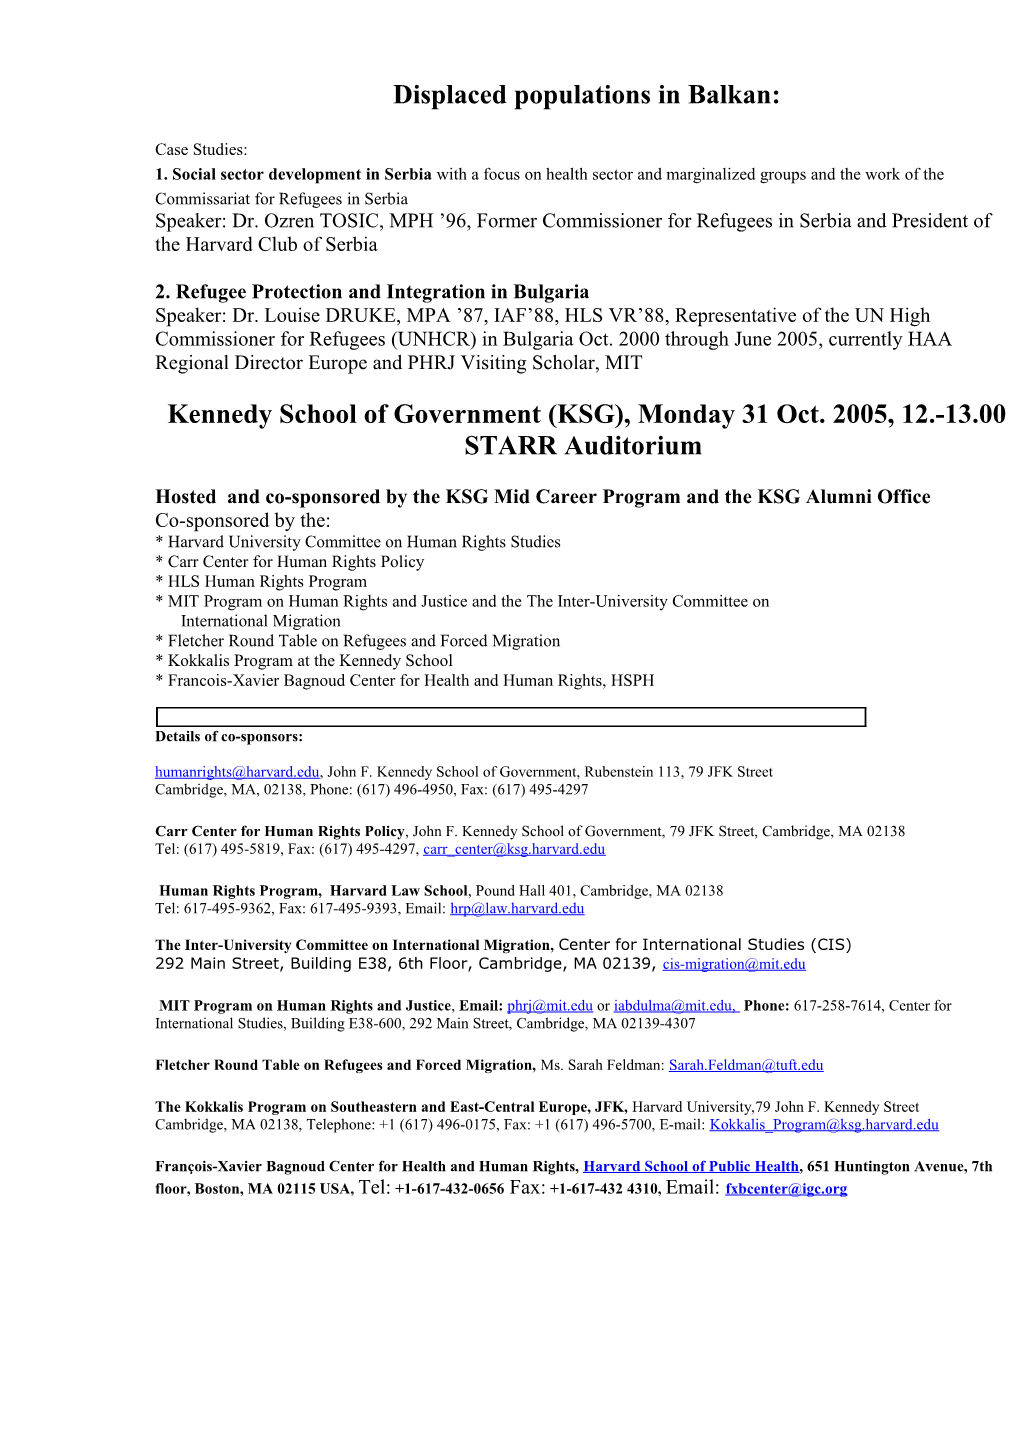 Kennedy School of Government (KSG), Monday 31 Oct